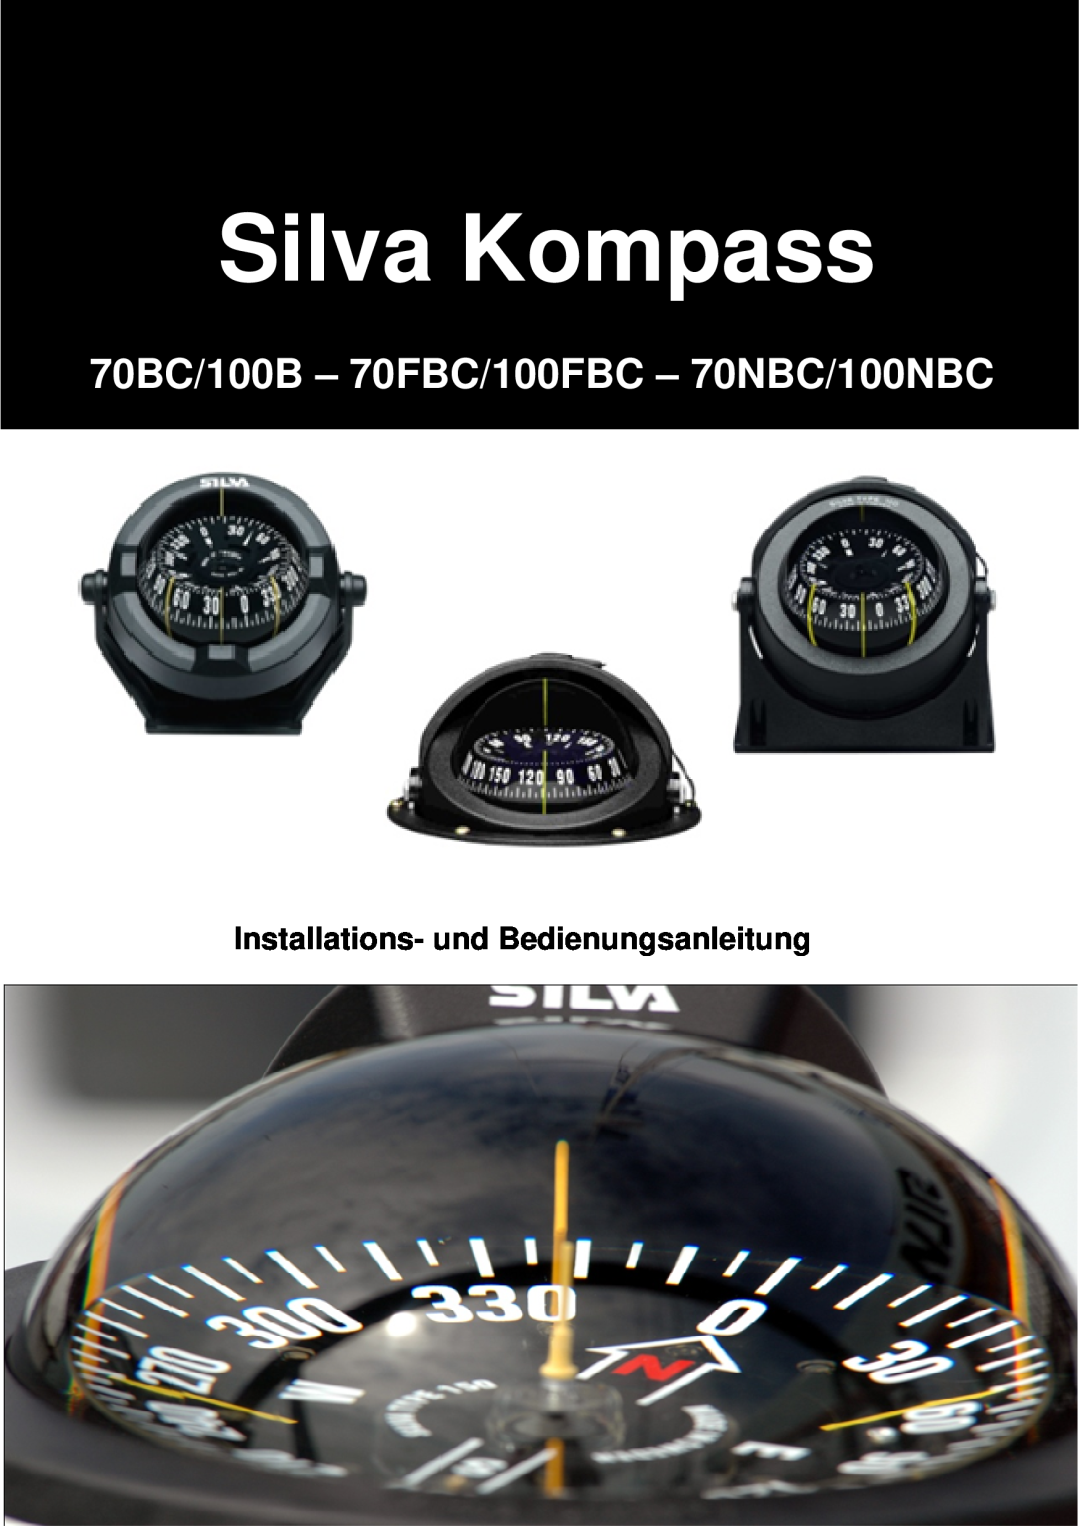 Silva manual Silva Kompass, 70BC/100B - 70FBC/100FBC - 70NBC/100NBC, Installations- und Bedienungsanleitung 